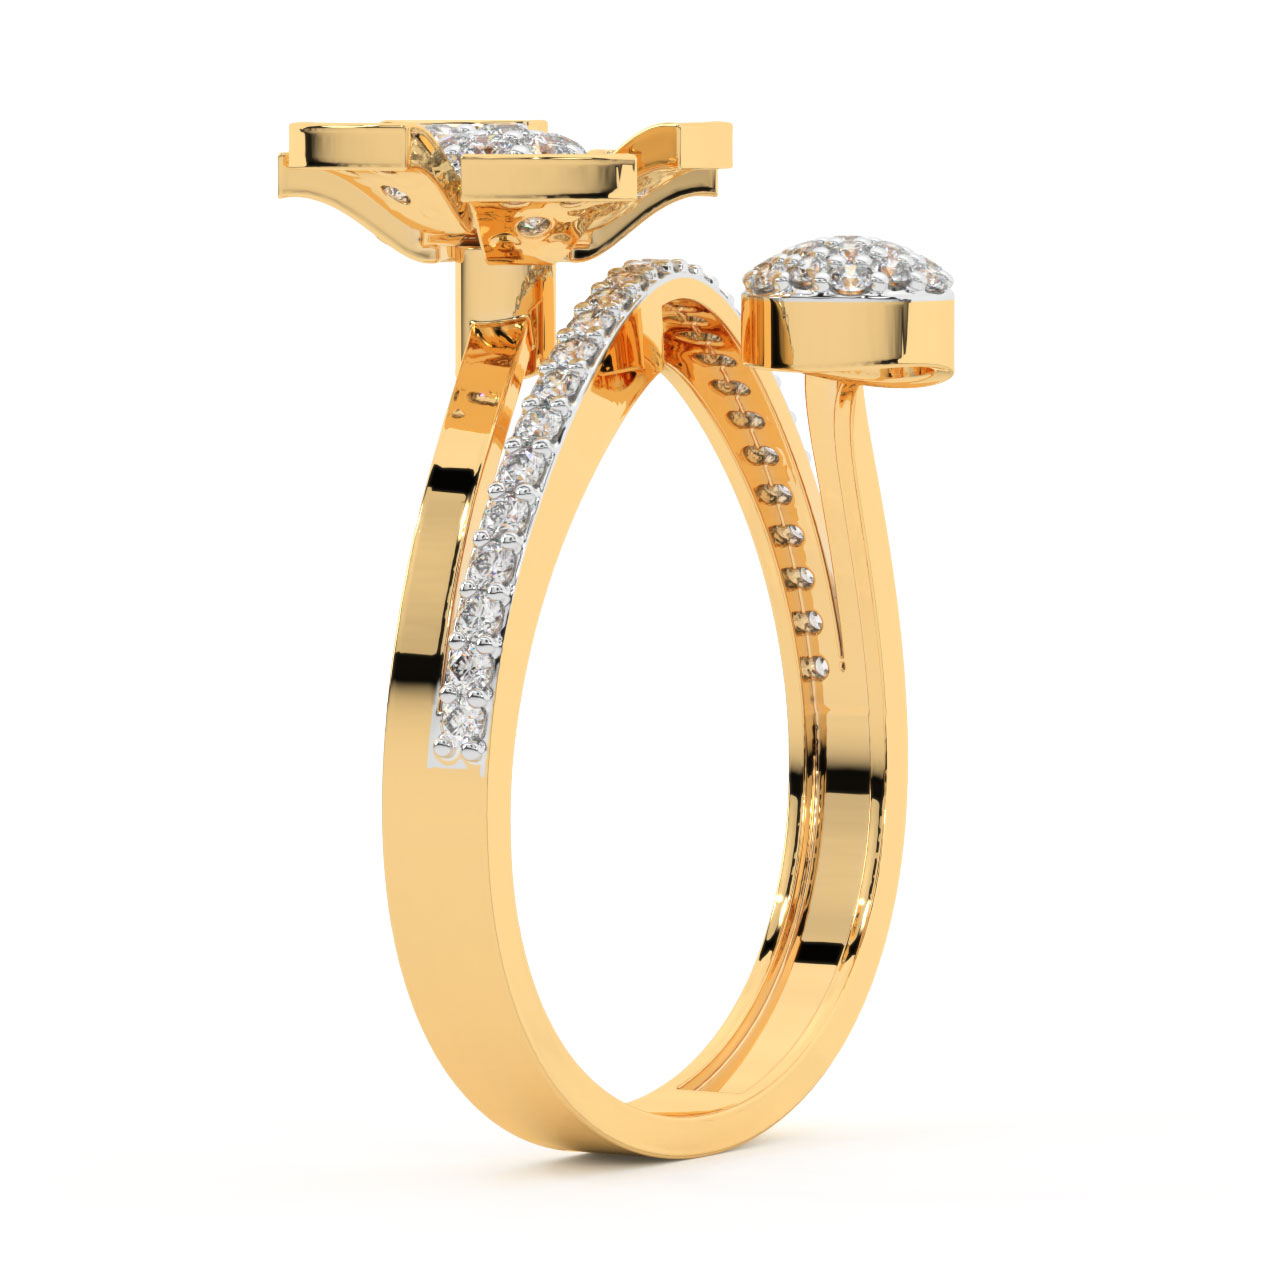 Ahern Round Diamond Engagement Ring